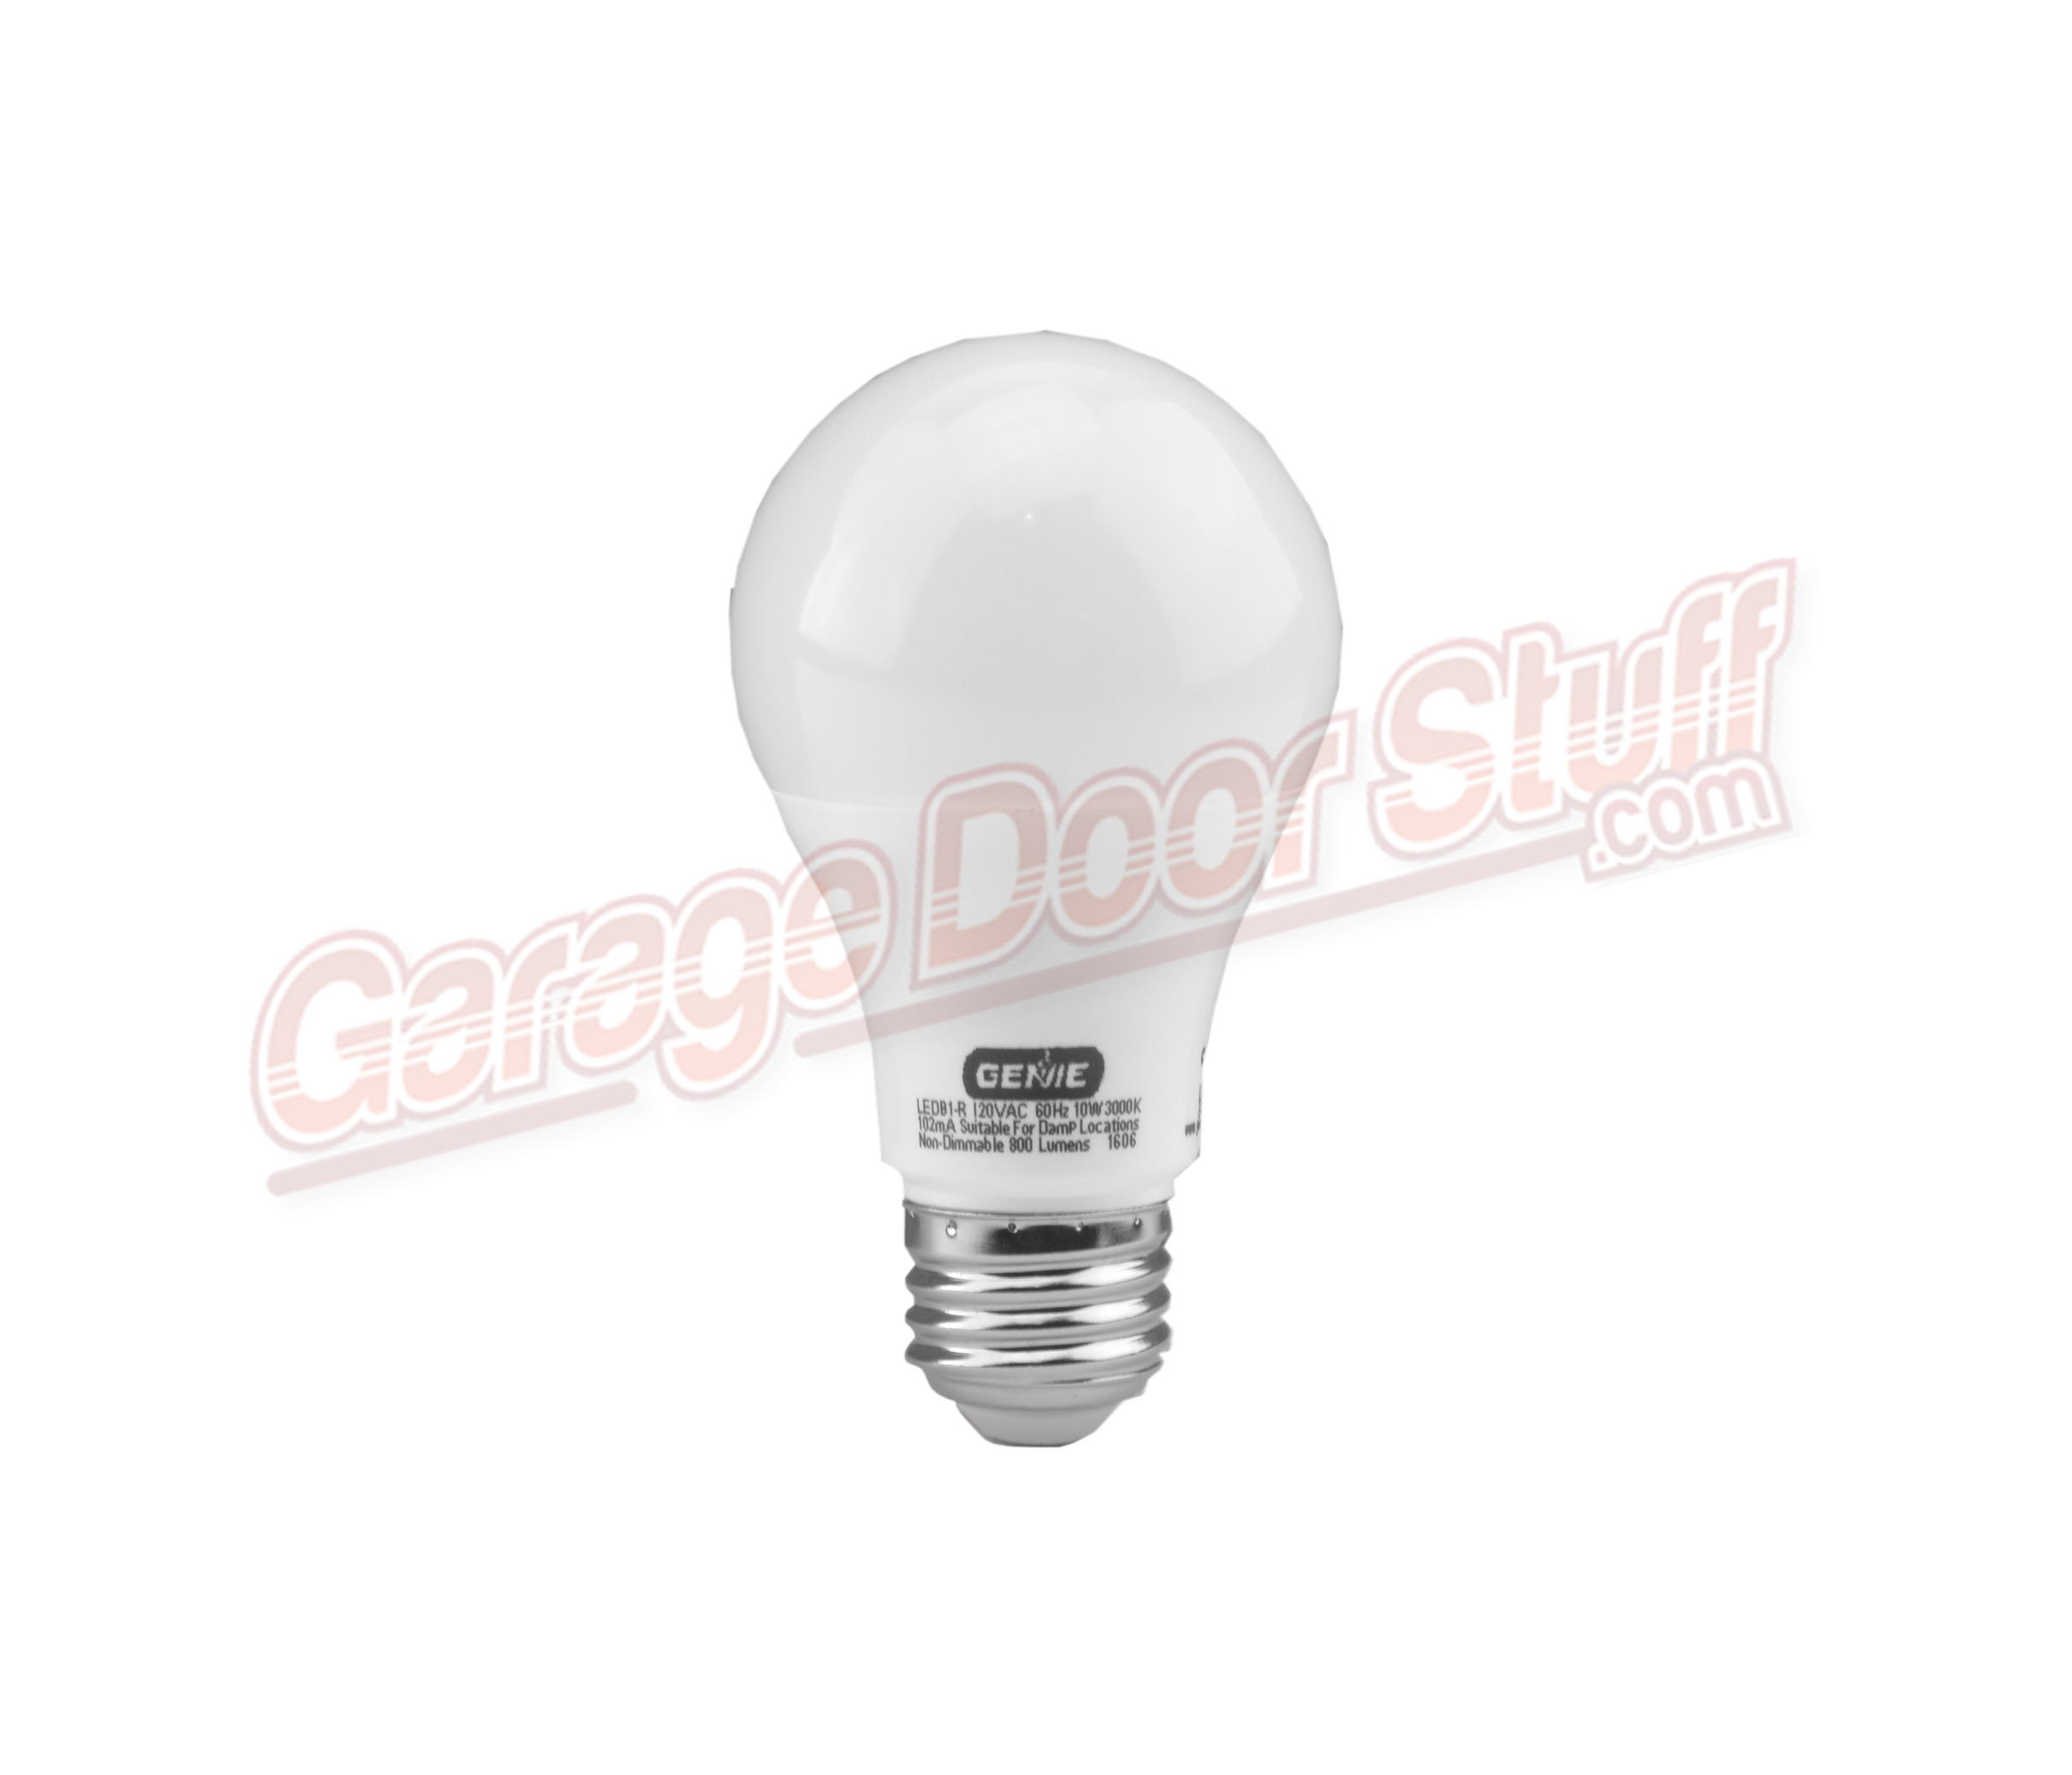 Garage Door Opener Led Light Bulb